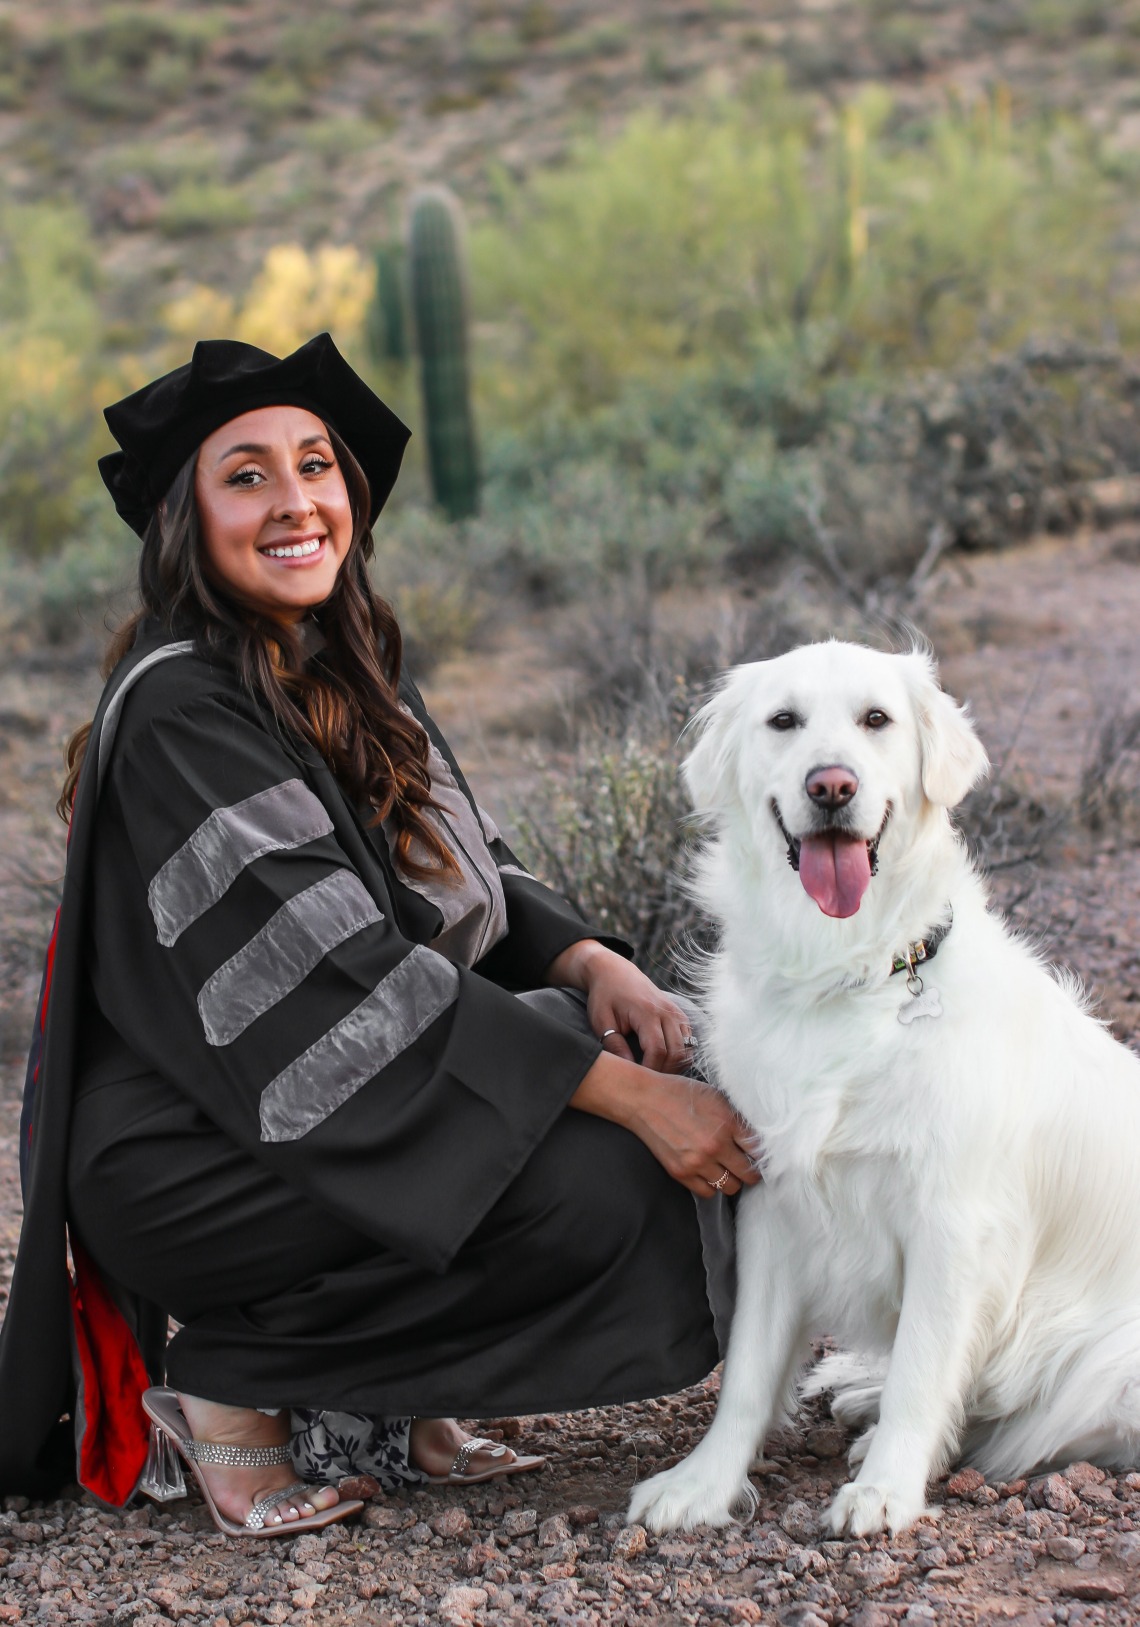 Camila Rocha wears graduation regalia and poses with a light-colored dog.